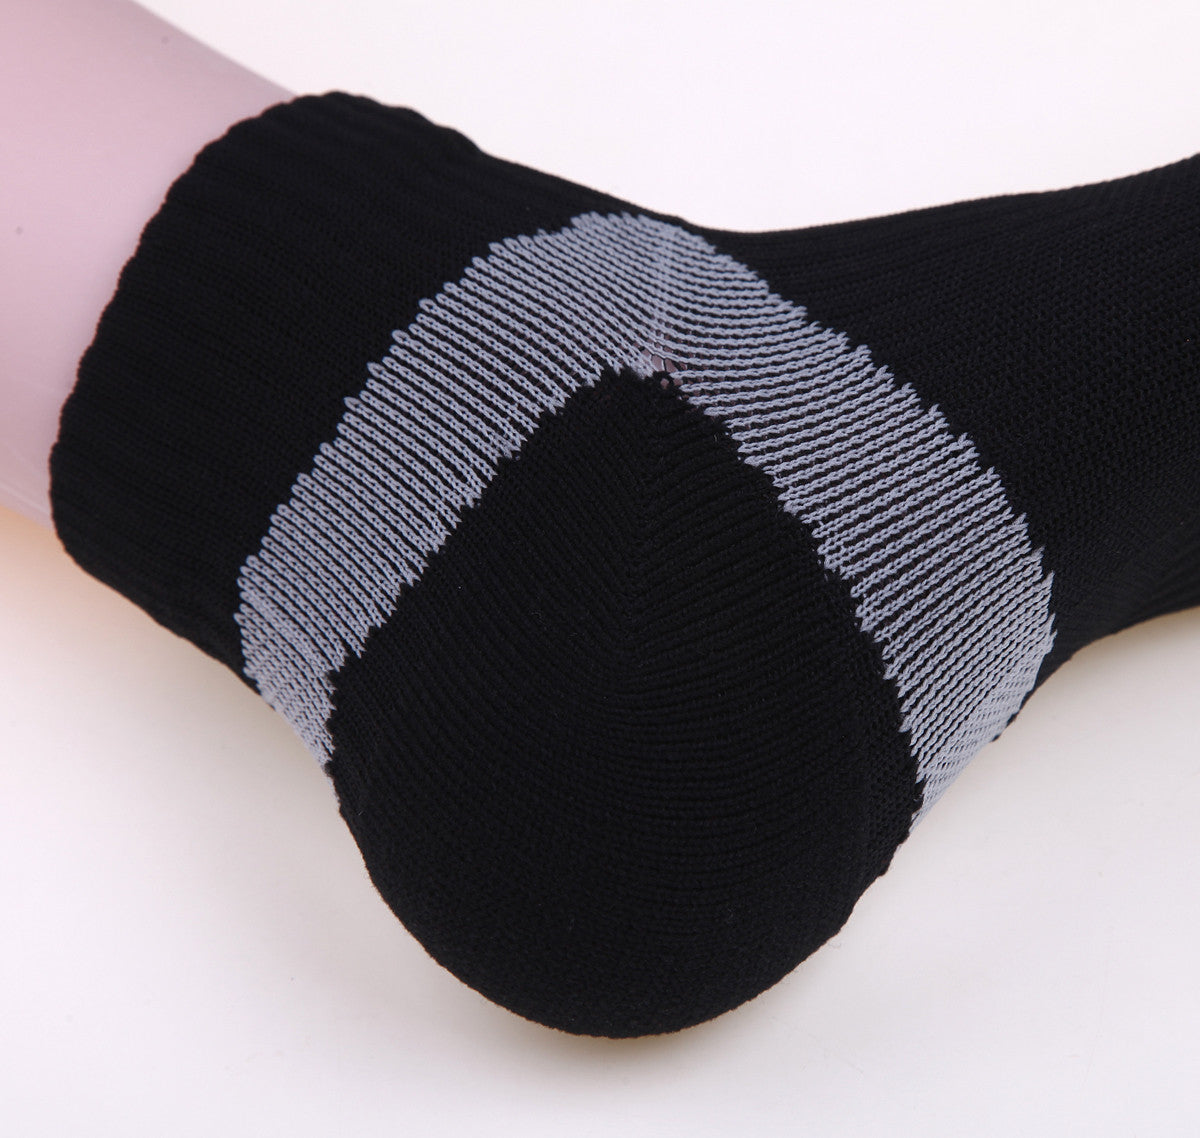 COOLMAX Professional Running Socks - Compression - Black - Size UK 7 - 11